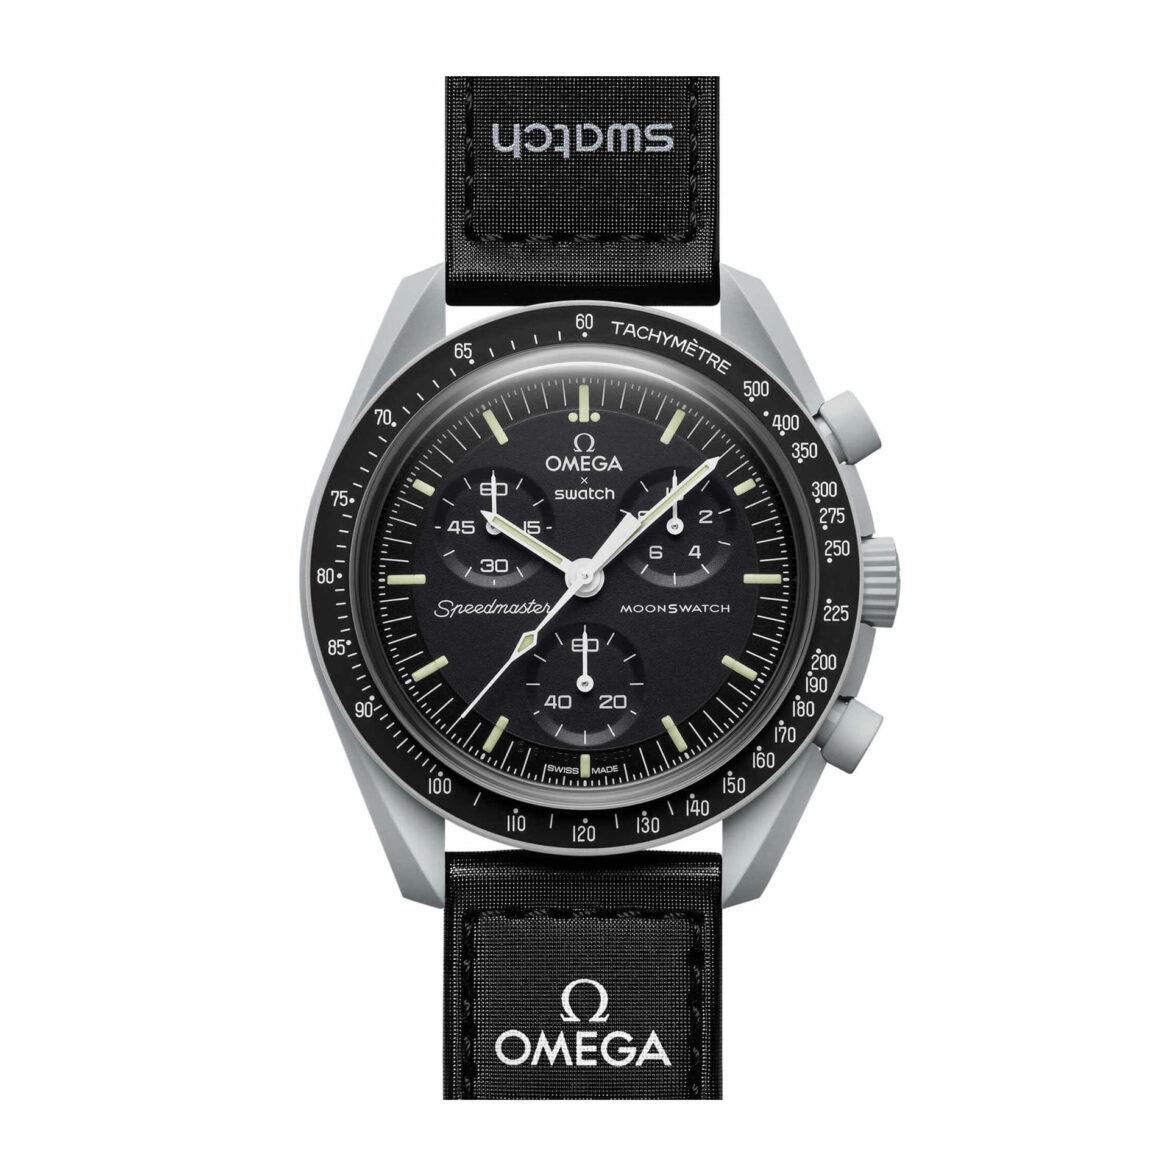 Omega x Swatch Bioceramic Moonswatch - Your Watch Hub